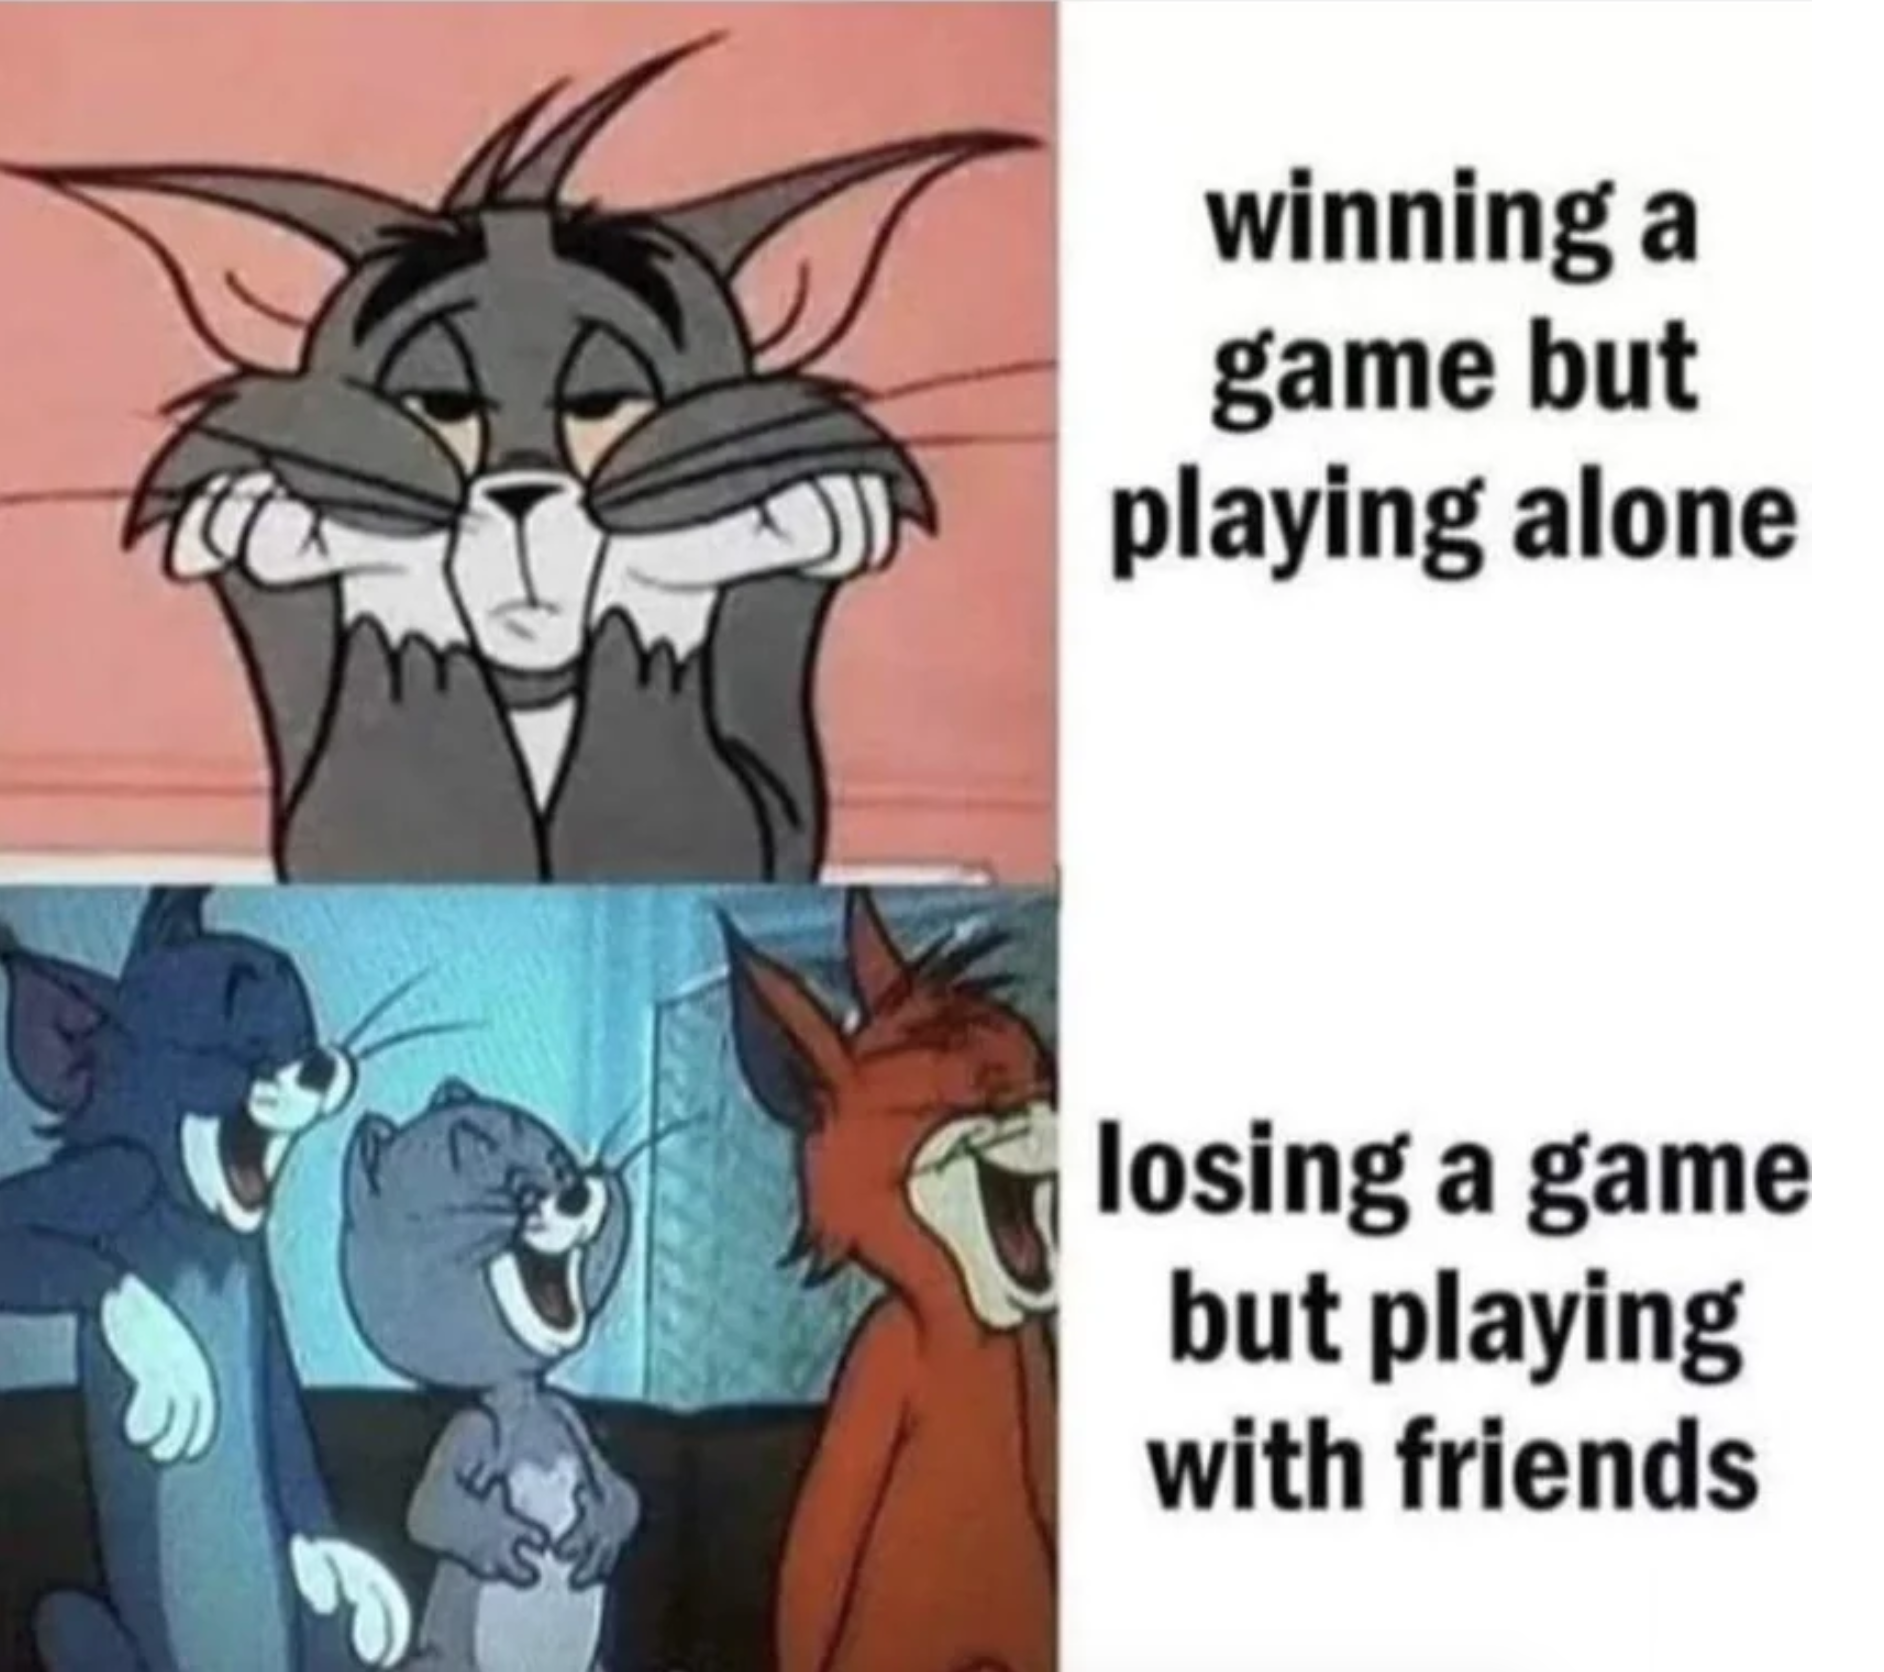 winning a game but playing alone - winning a game but playing alone losing a game but playing with friends